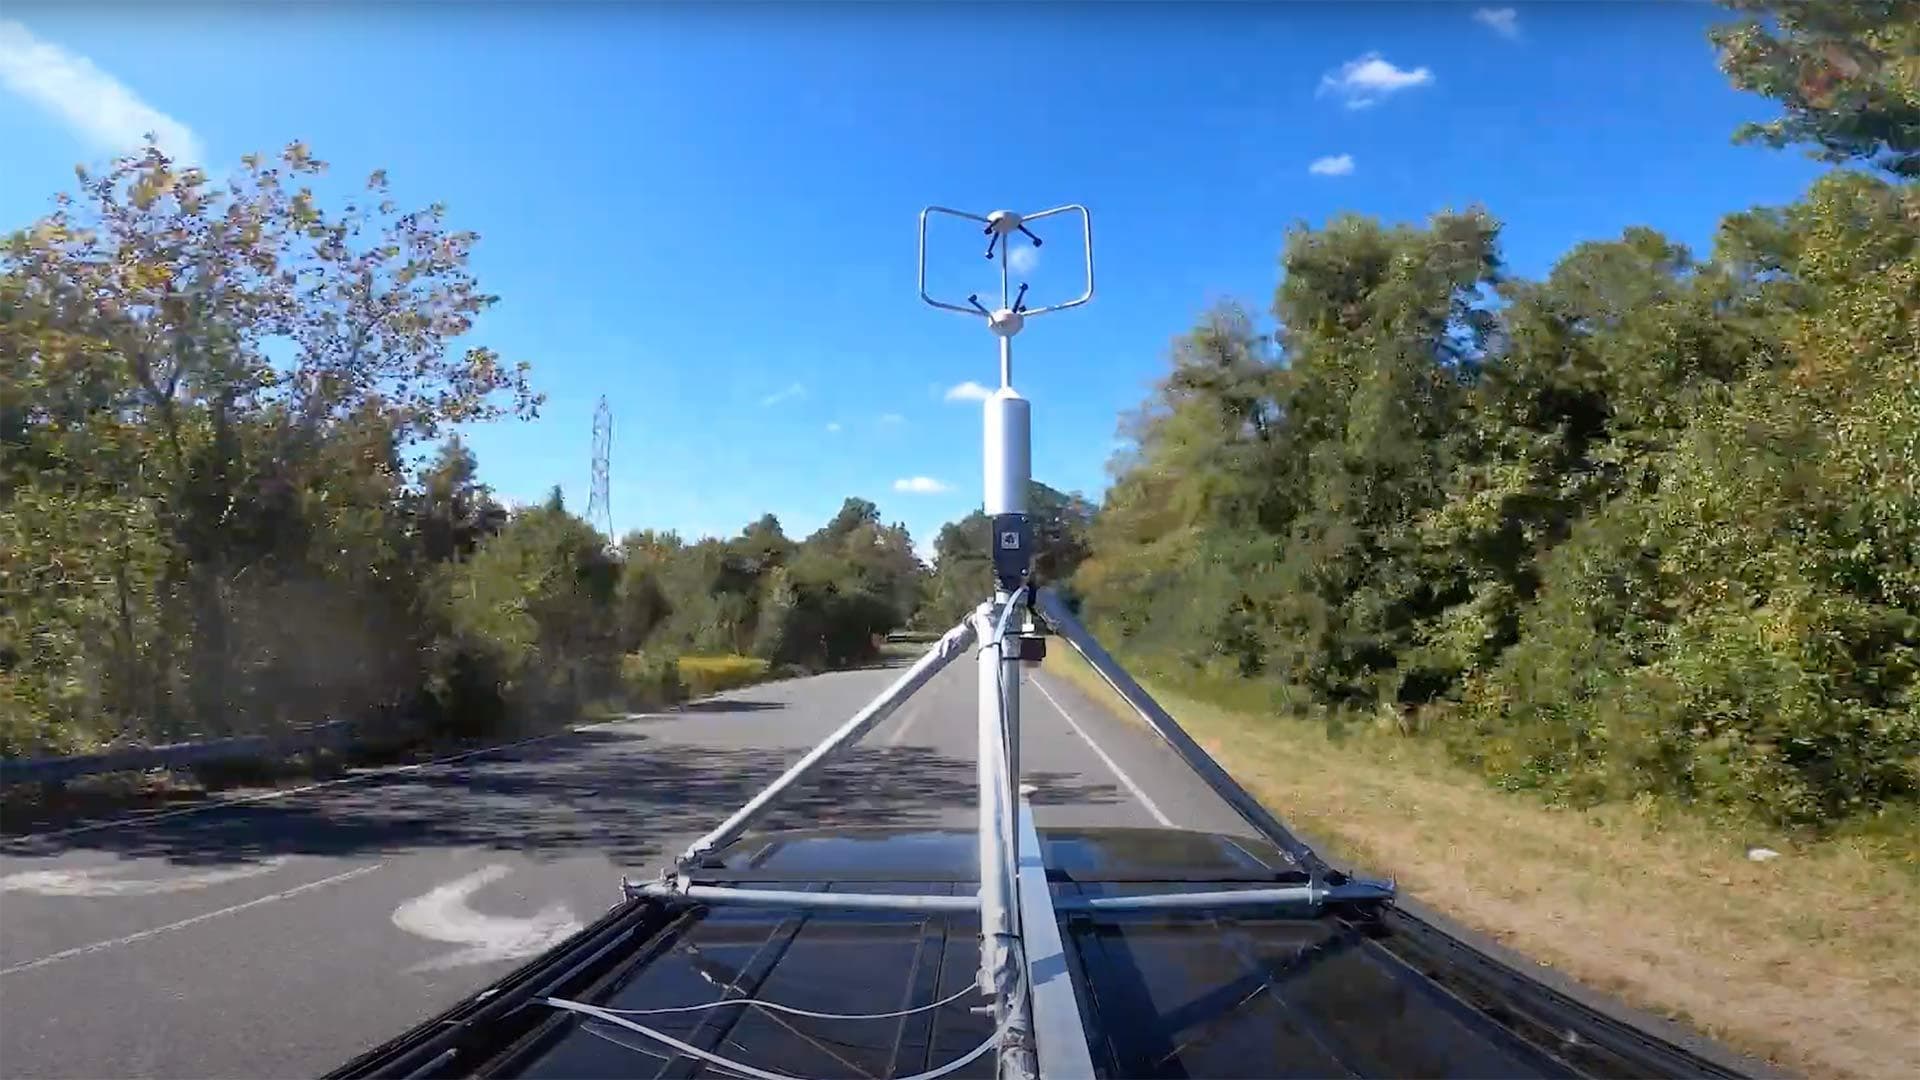 air monitoring equipment rides atop truck